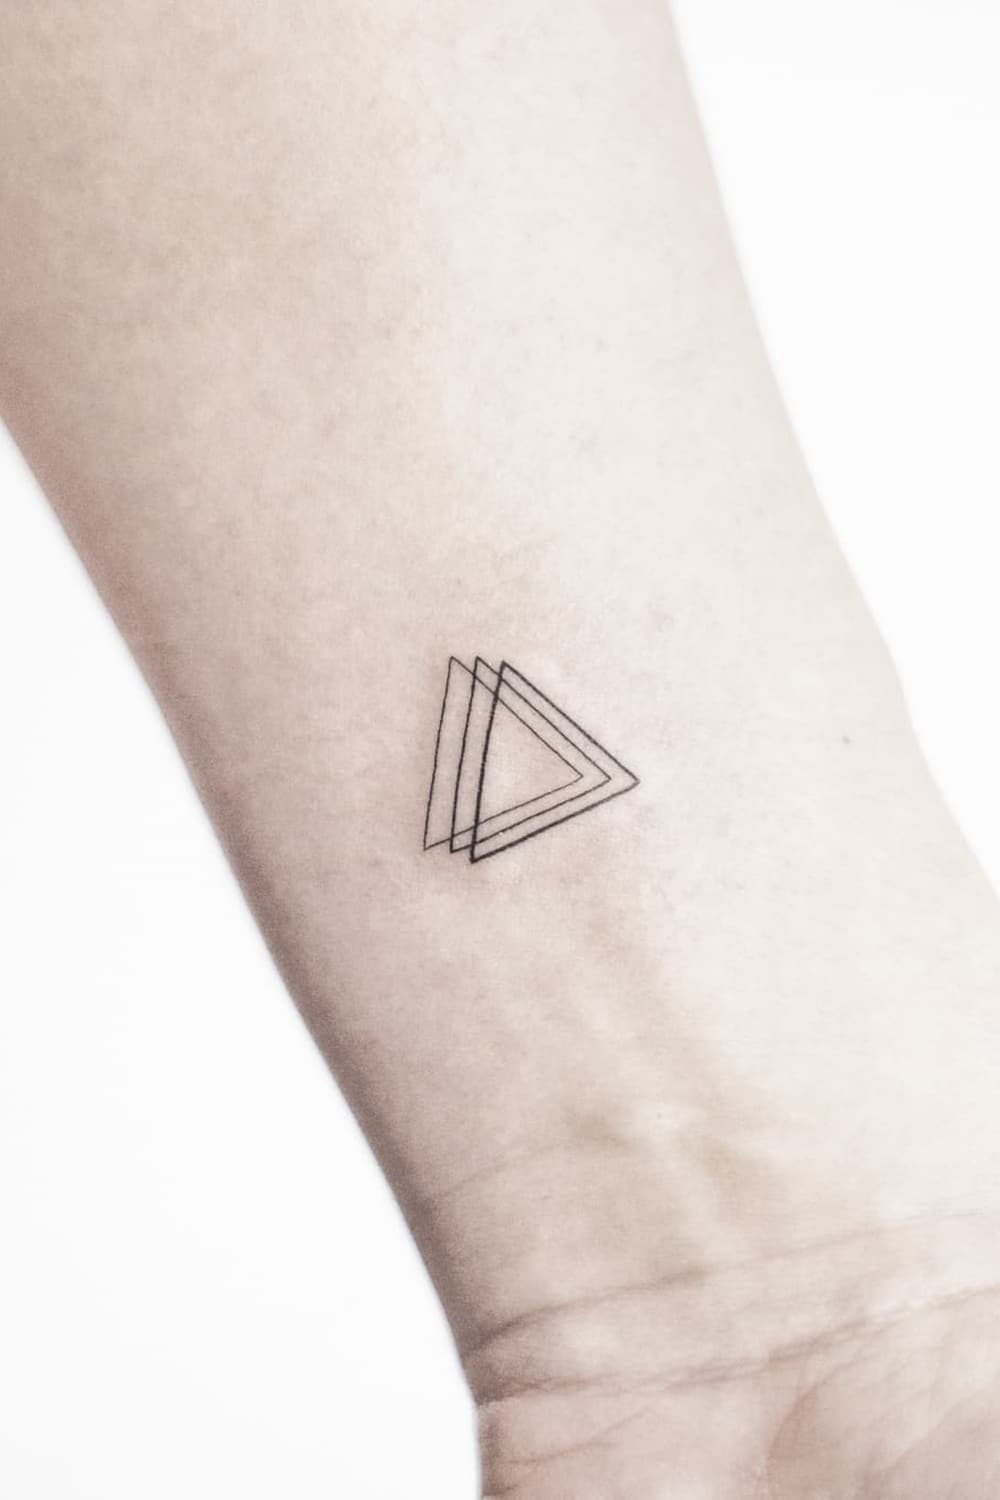 Triangular Family Tattoo